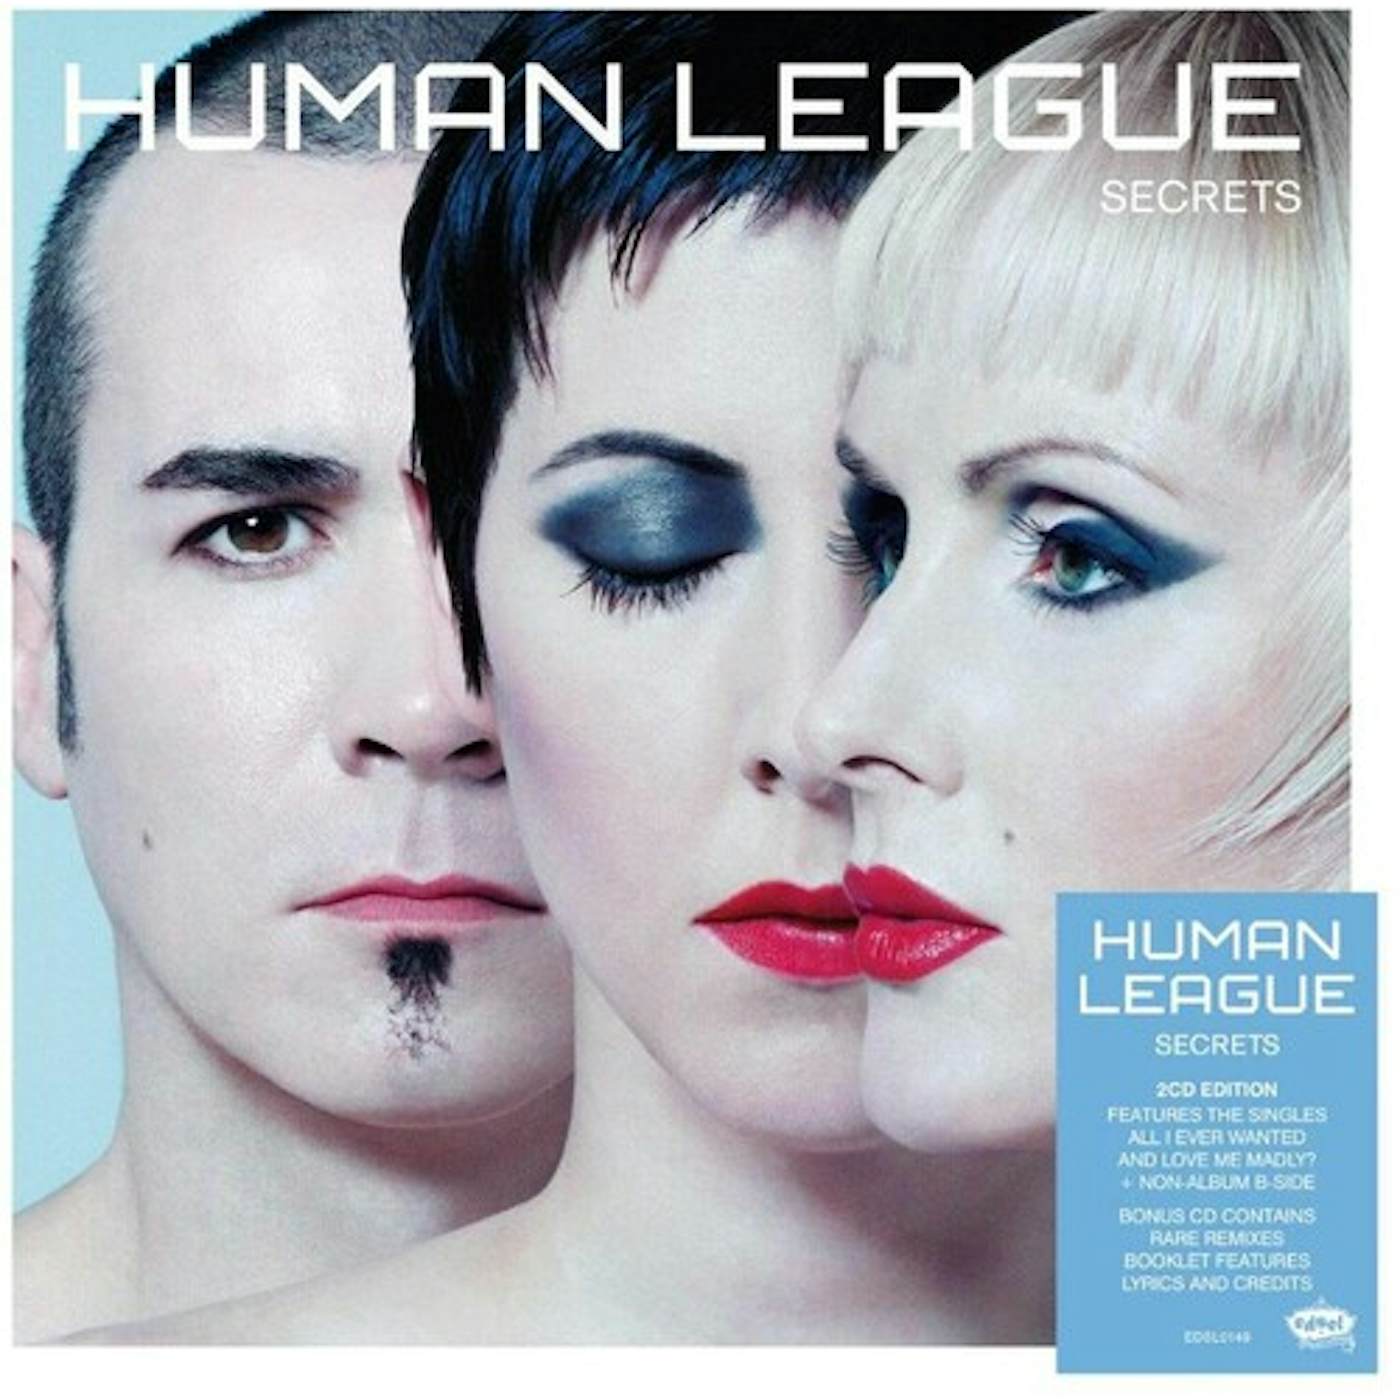 The Human League SECRETS CD